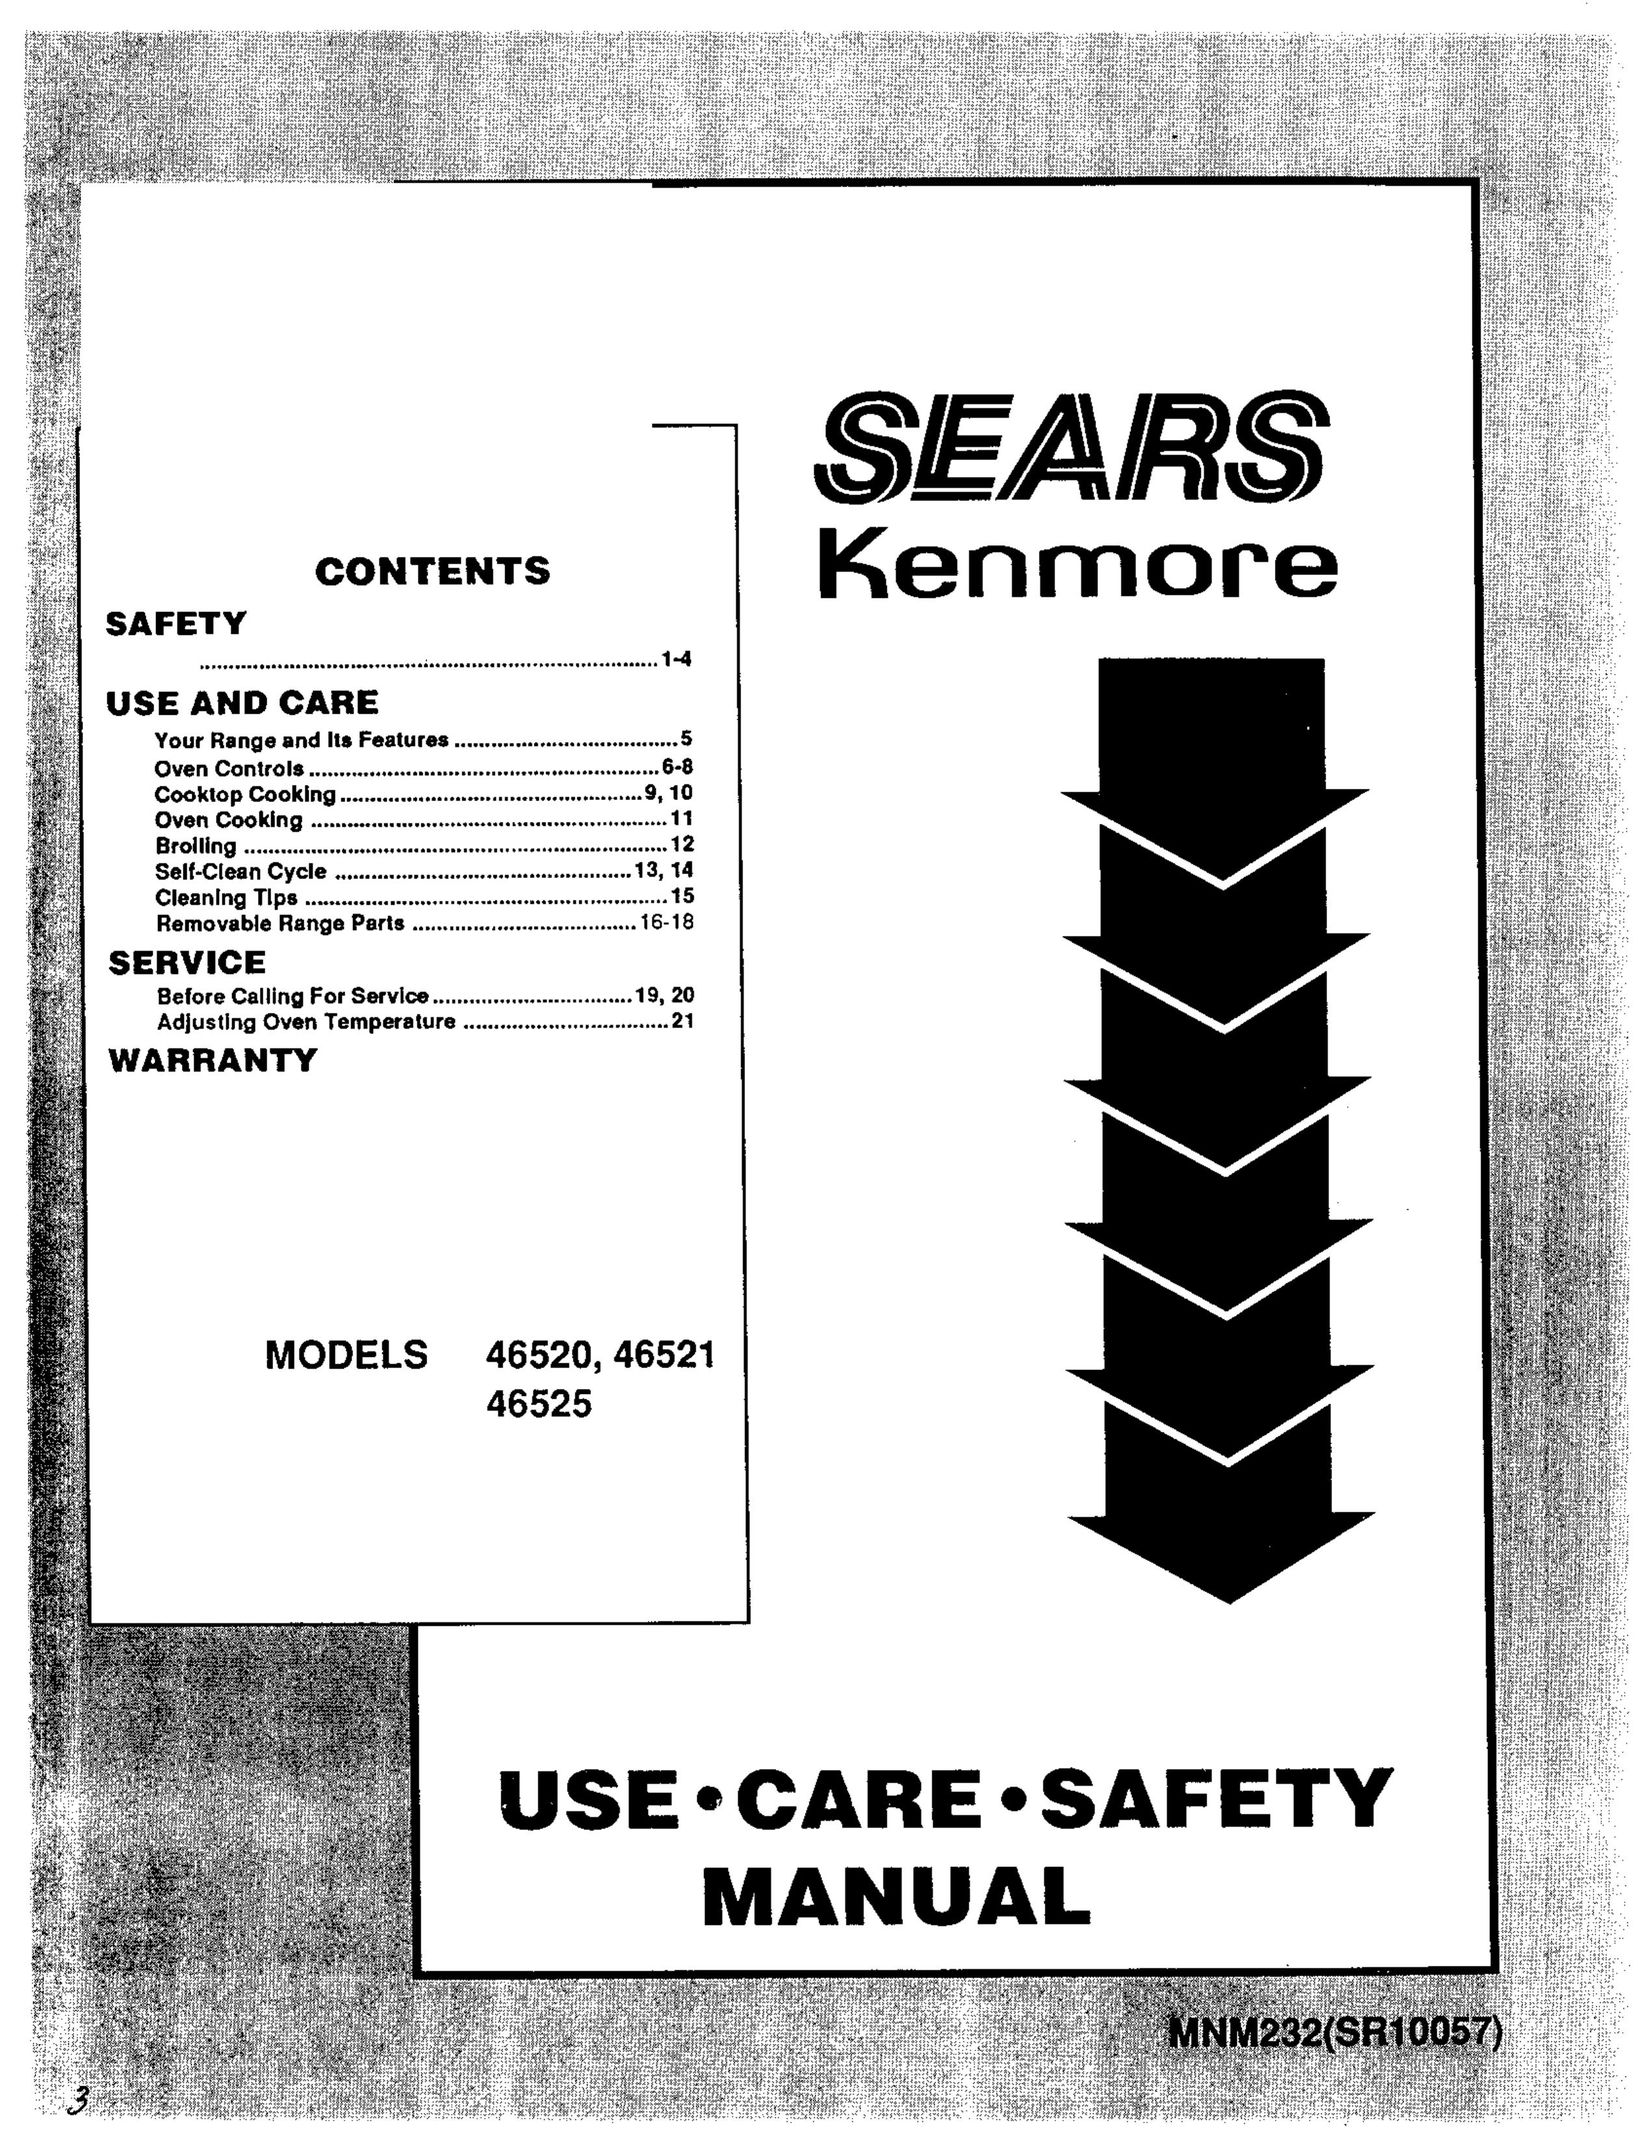 Sears 46520 Range User Manual